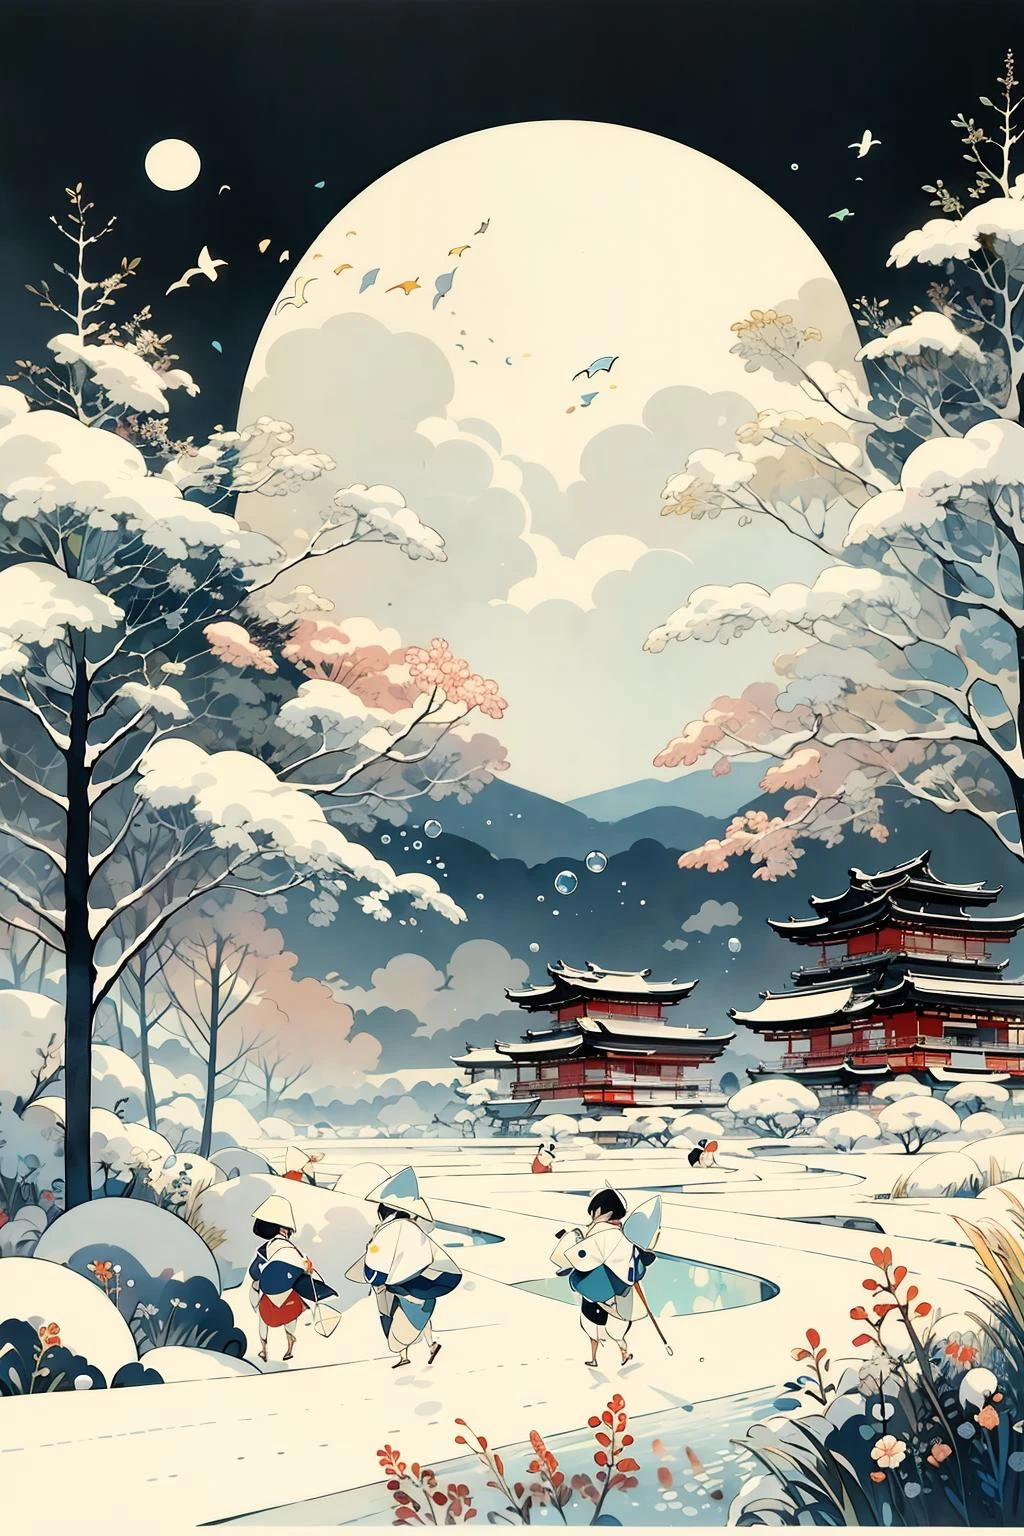 Meisterwerk,beste Qualität,süßes Ukiyo-e,Mond,